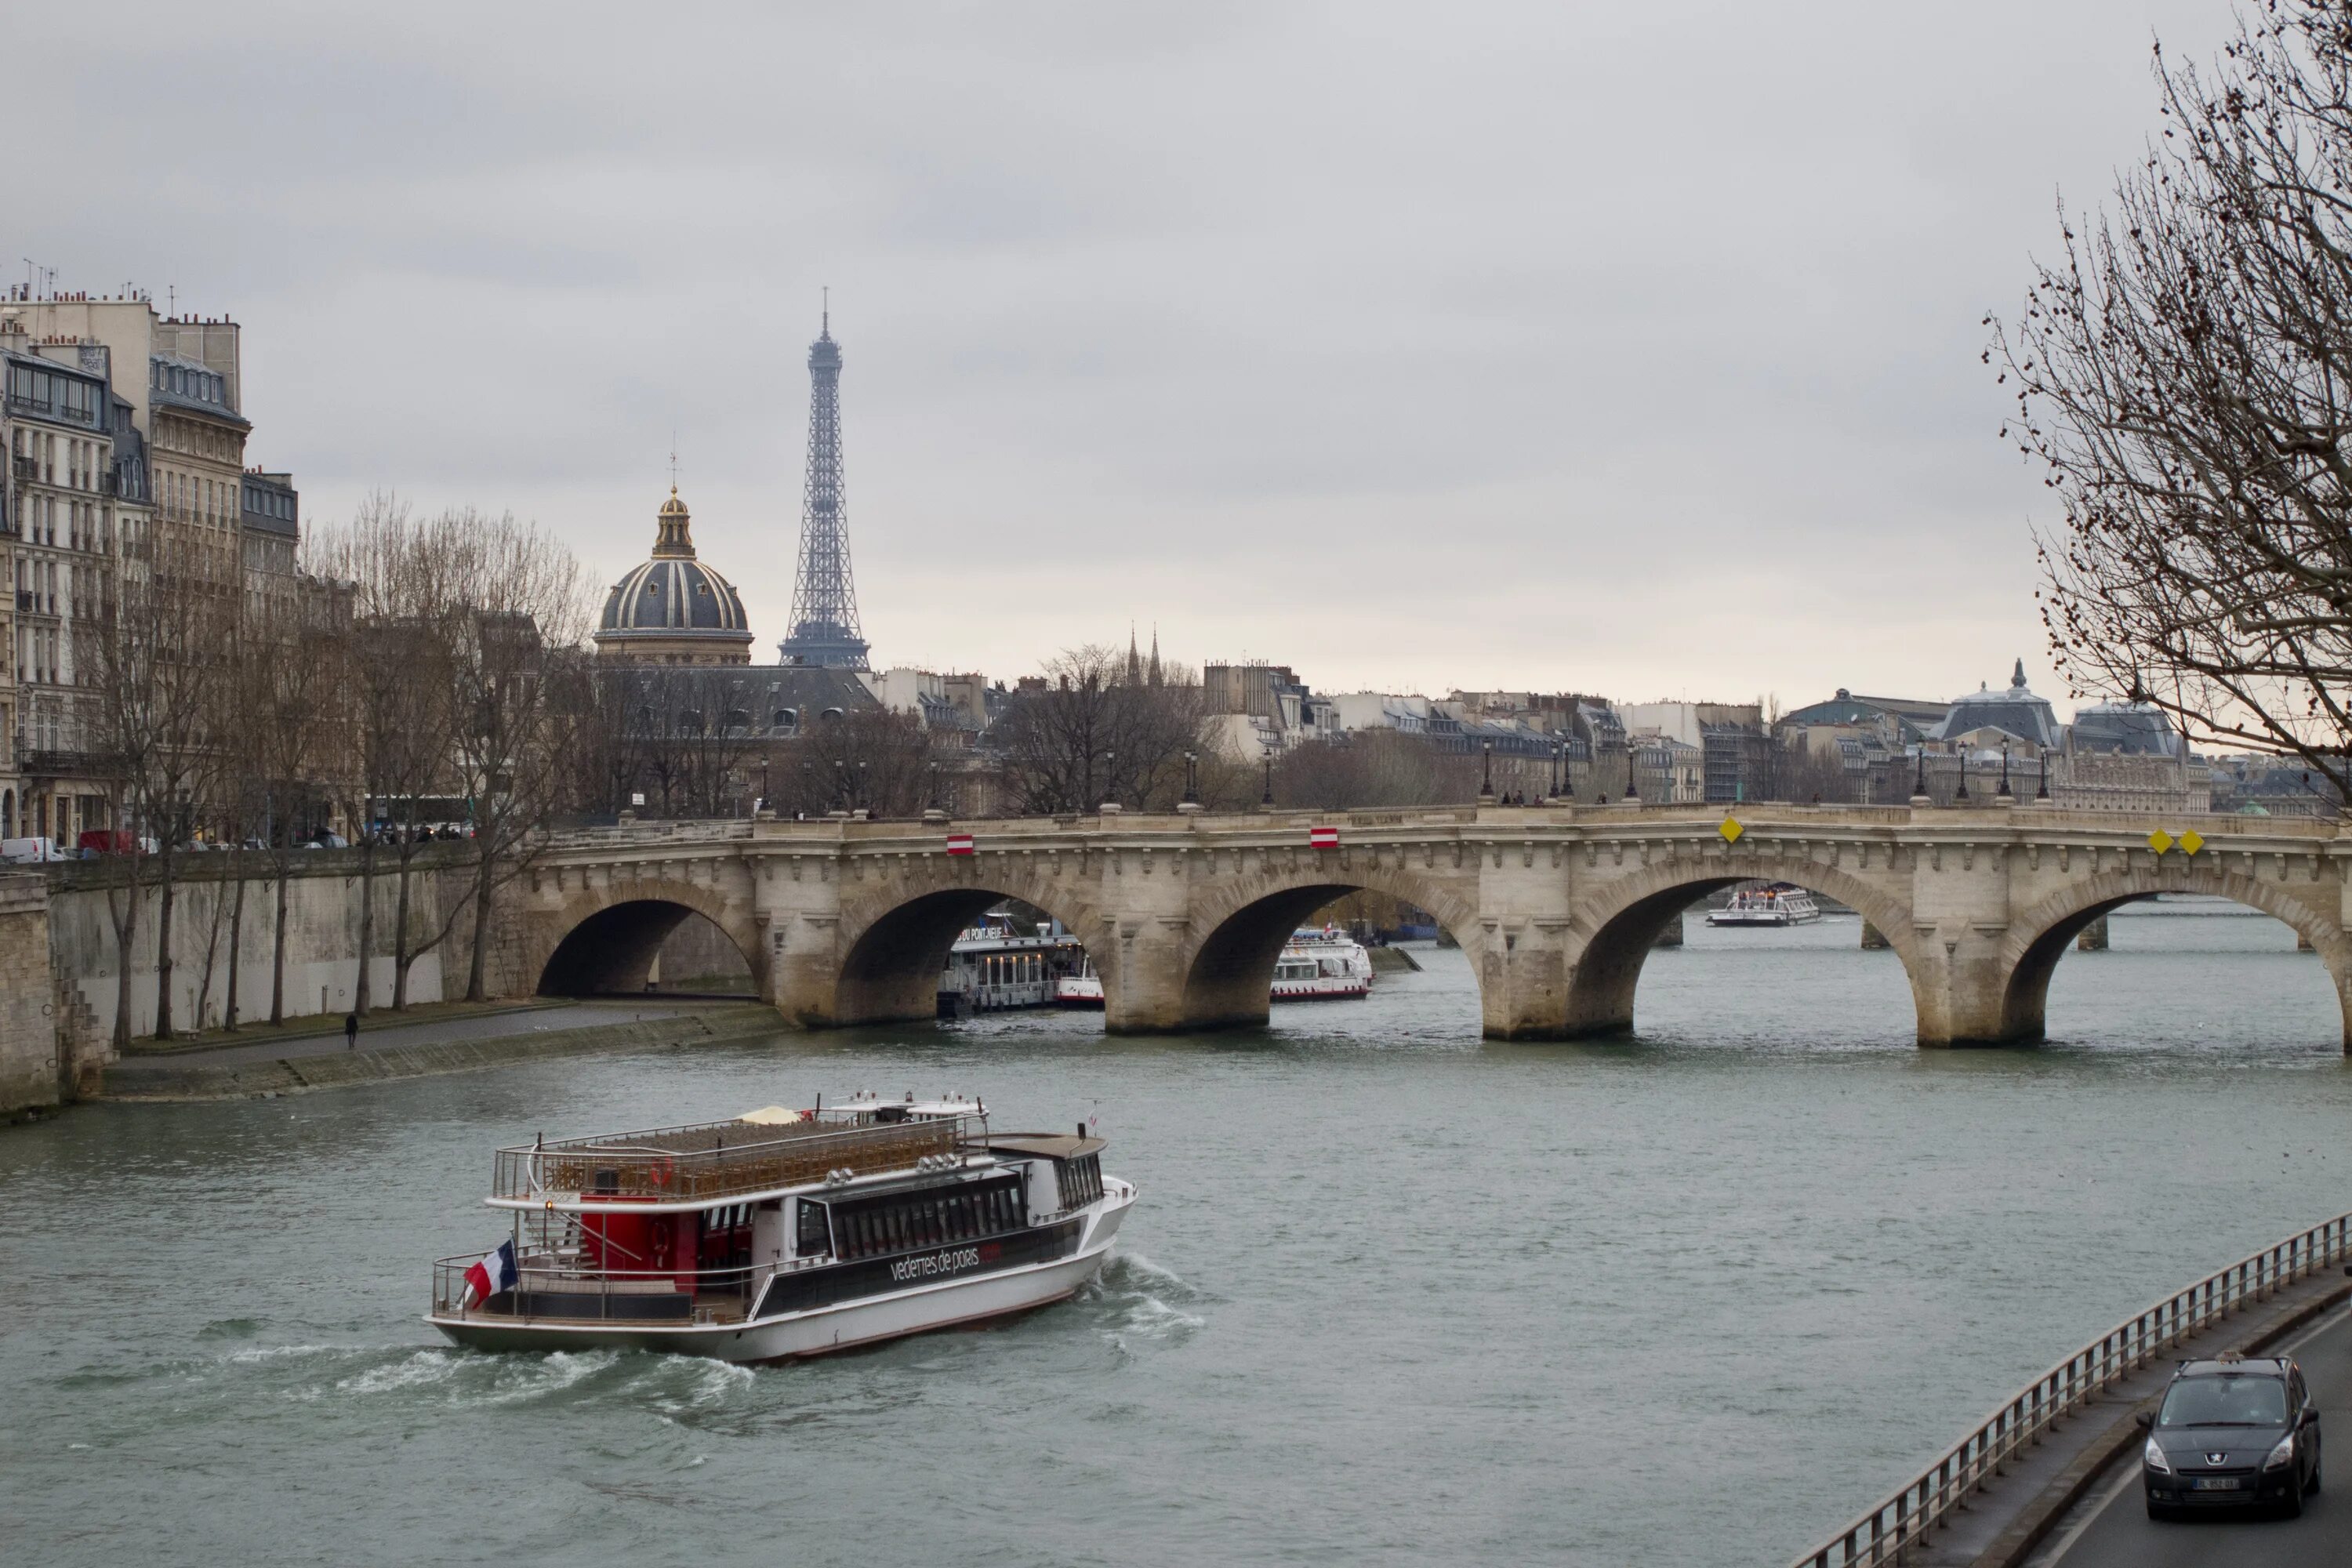 Пон вид. Понт Неф в Париже. Pont neuf в Париже. Мост понт Неф в Париже. Новый мост Pont neuf.